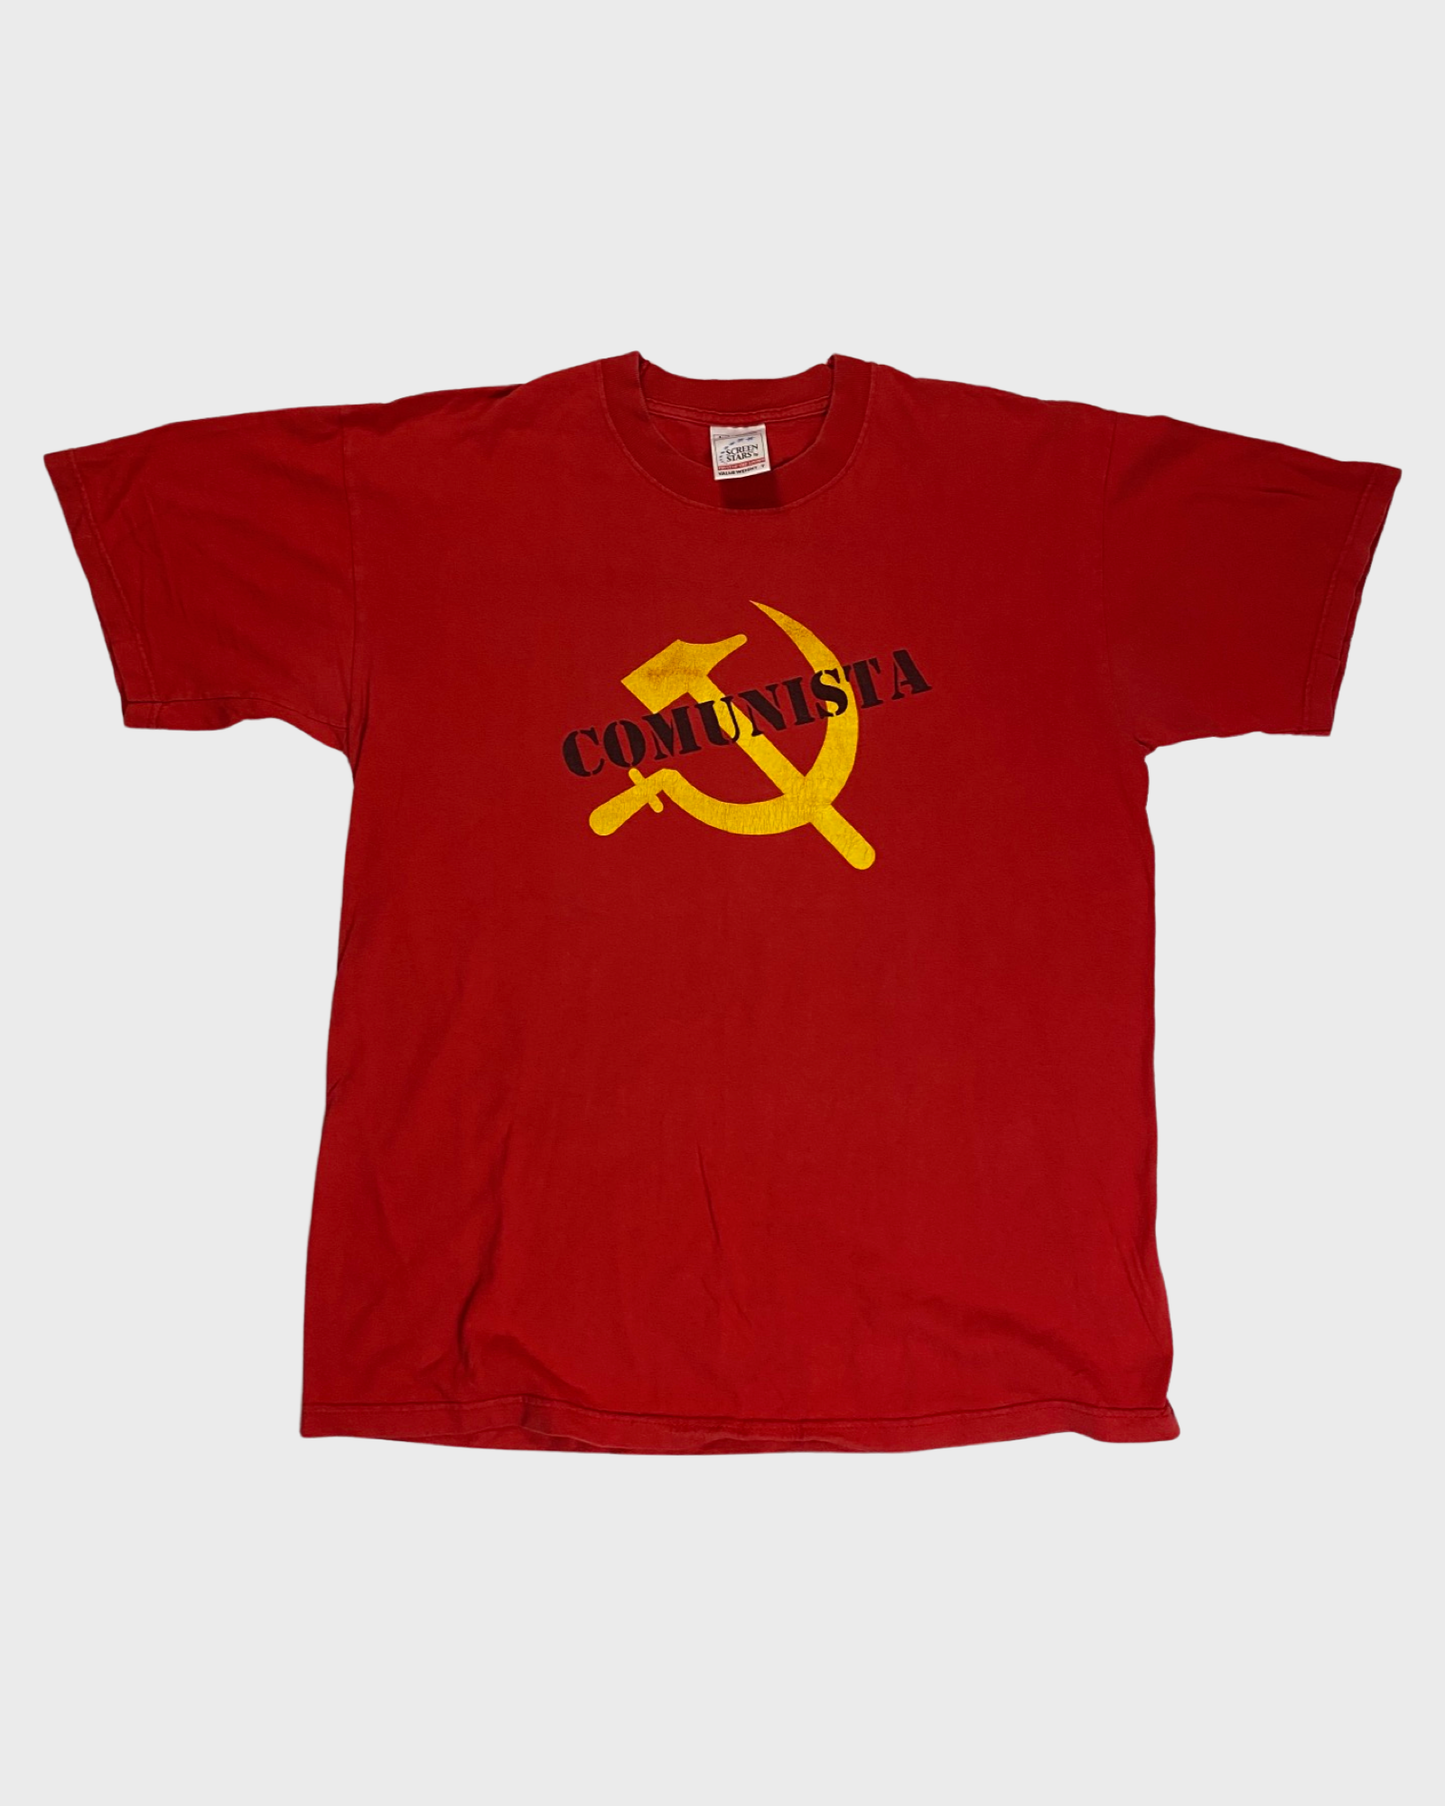 Communista hammer & sicle Soviet vintage tshirt SZ:L